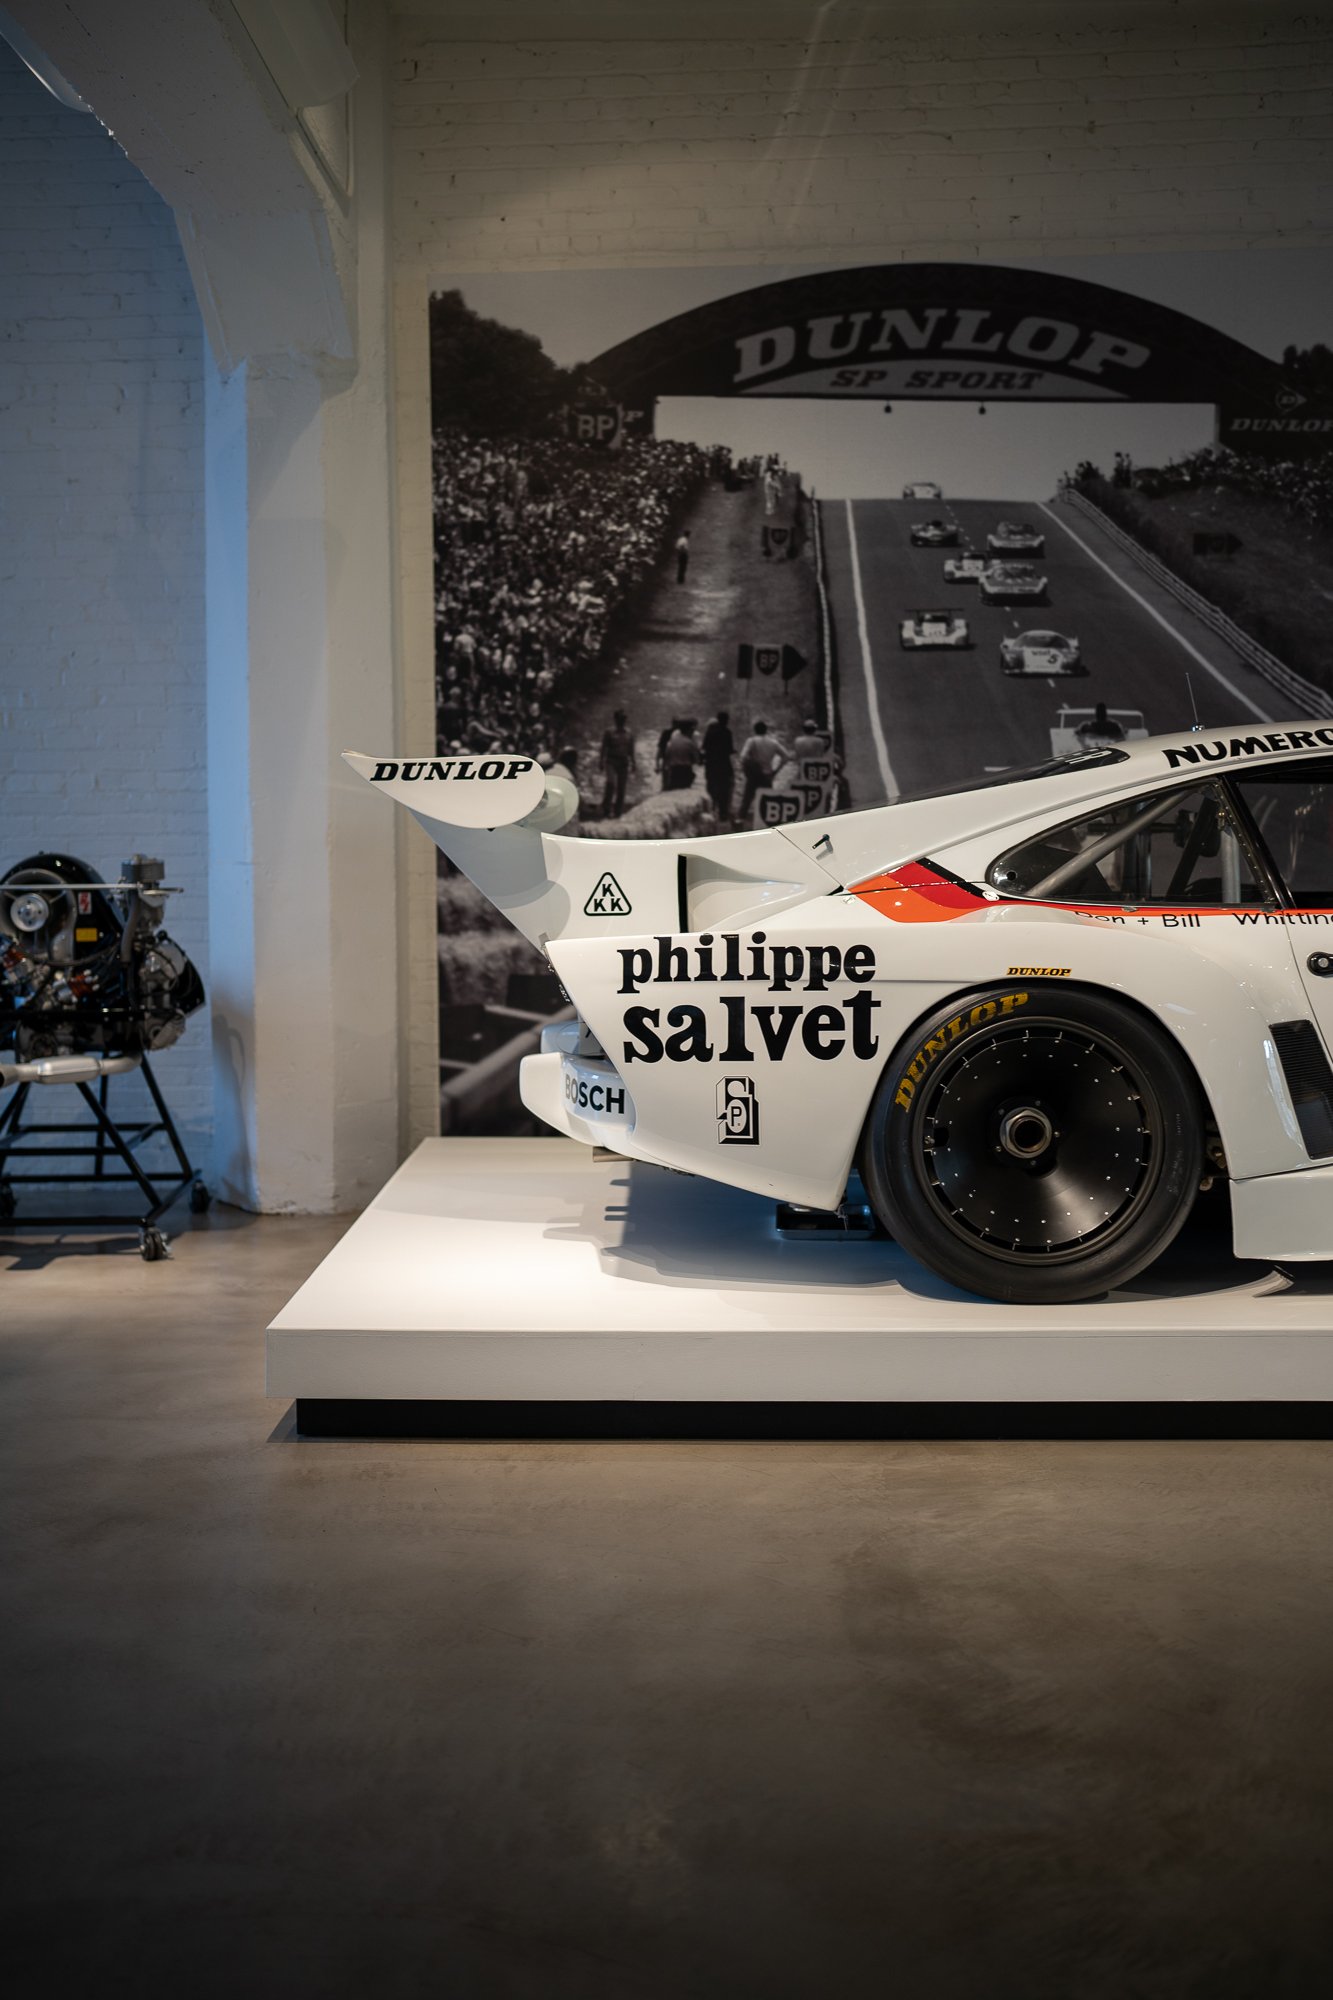 Philippe Salvet racing 935 K3